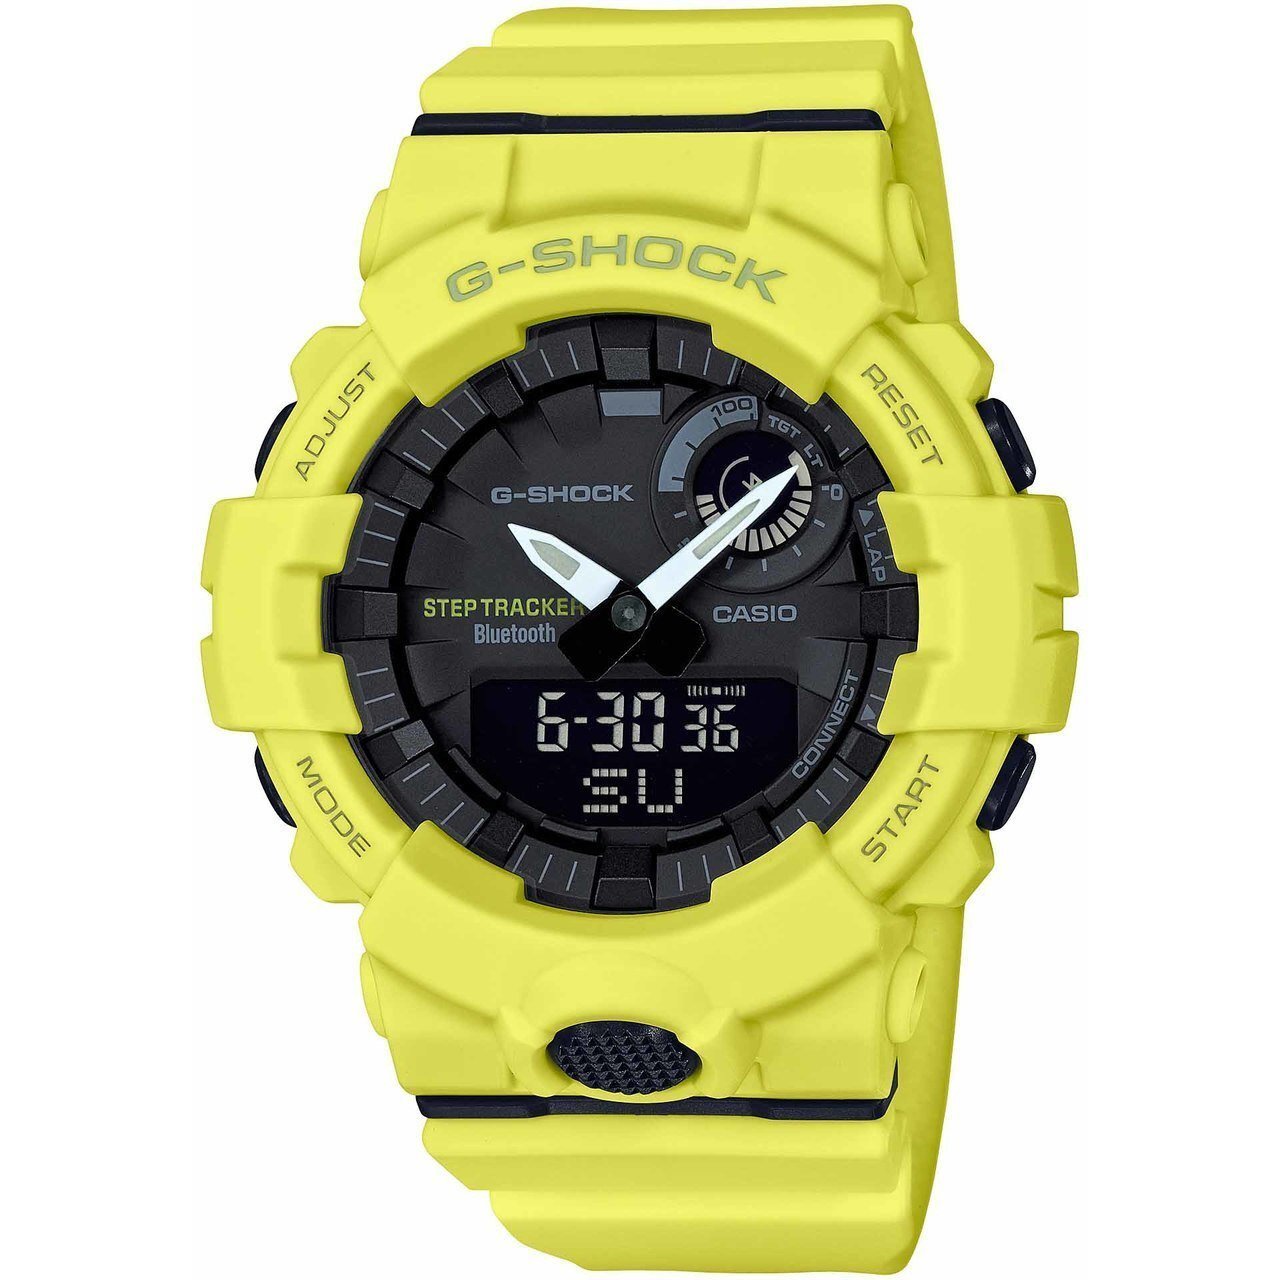 G-Shock GBA800 Bluetooth Step Tracker Training Timer Yellow